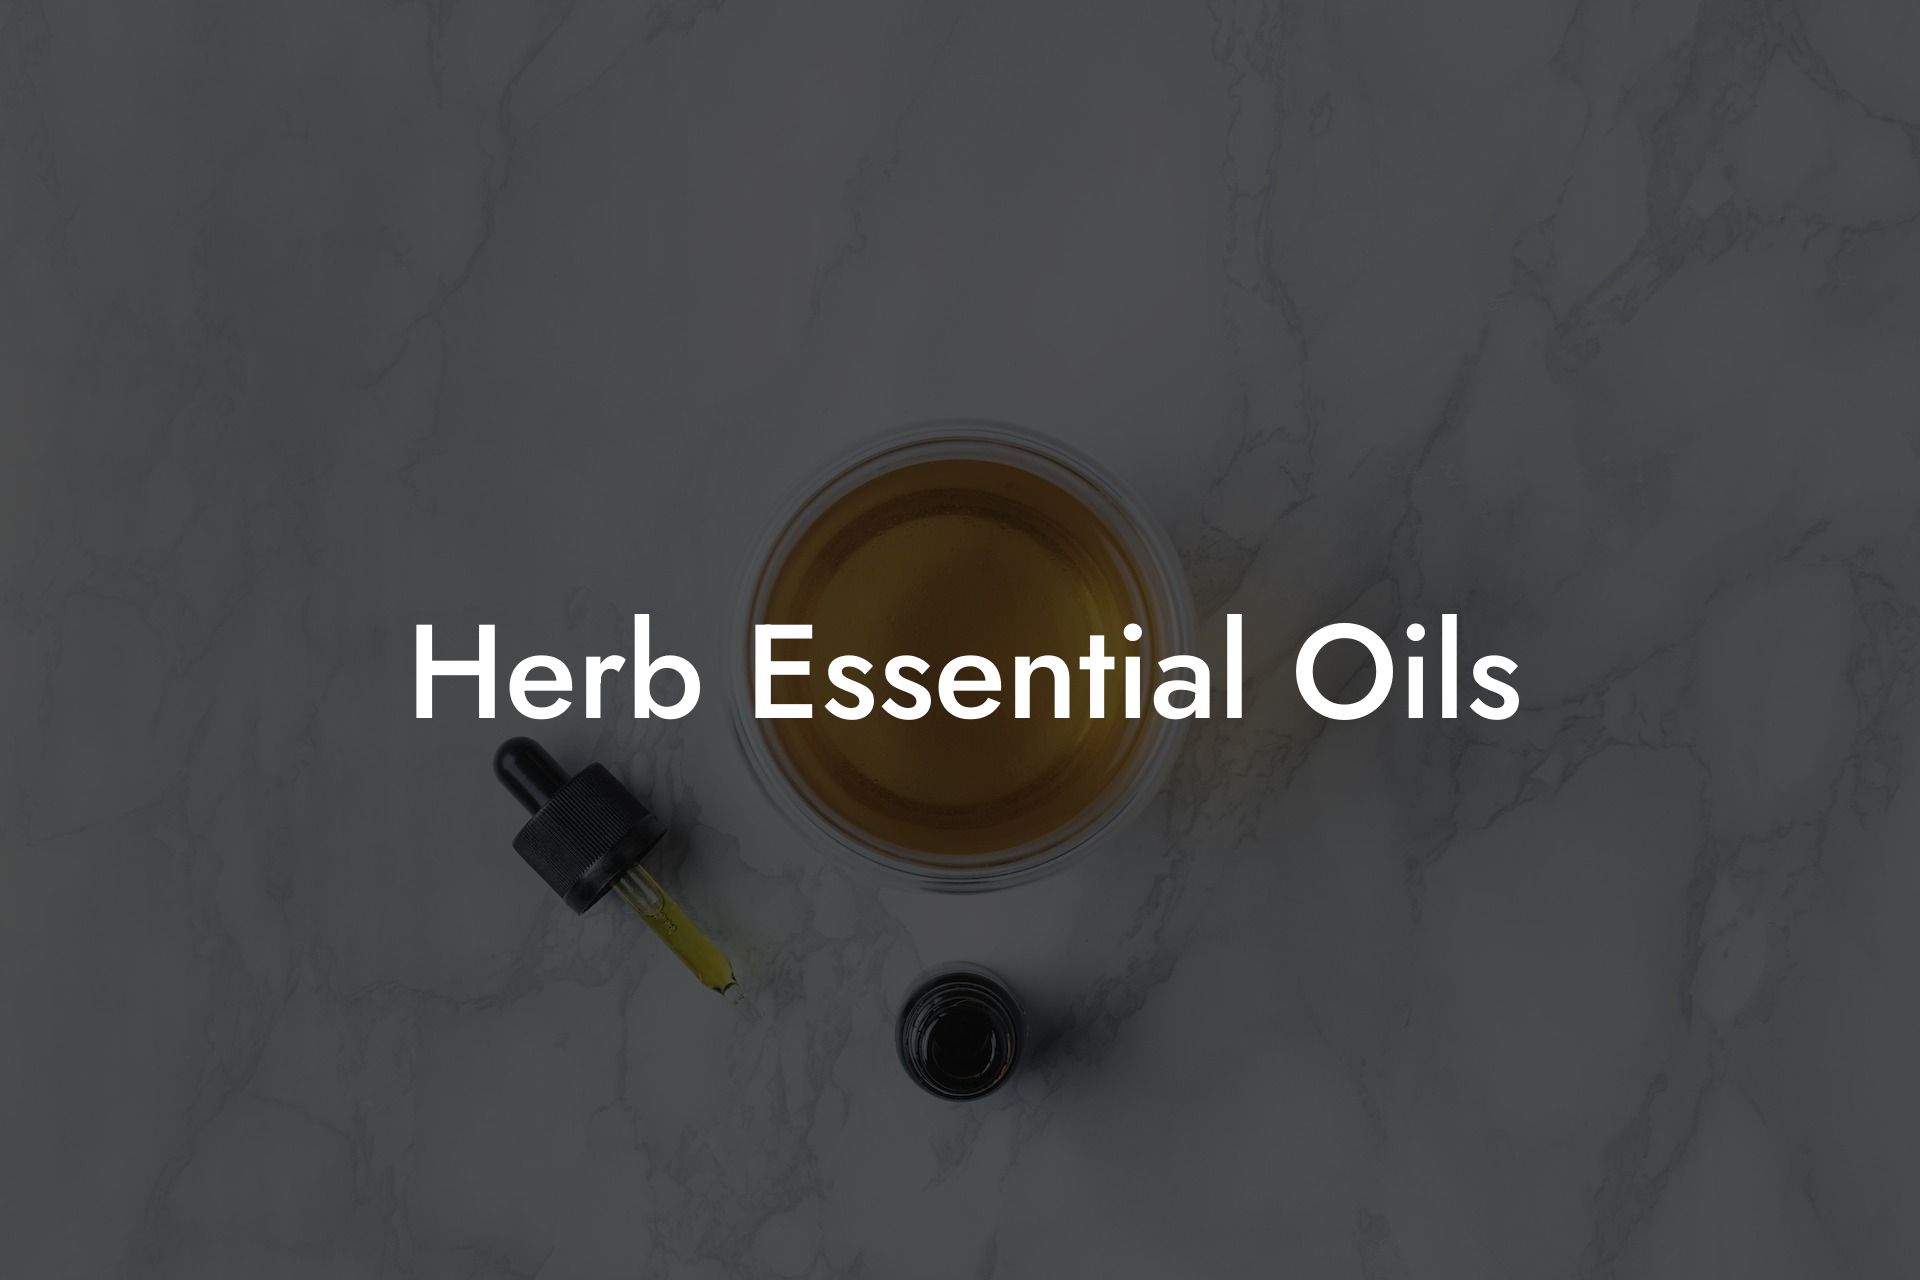 Herb Essential Oils